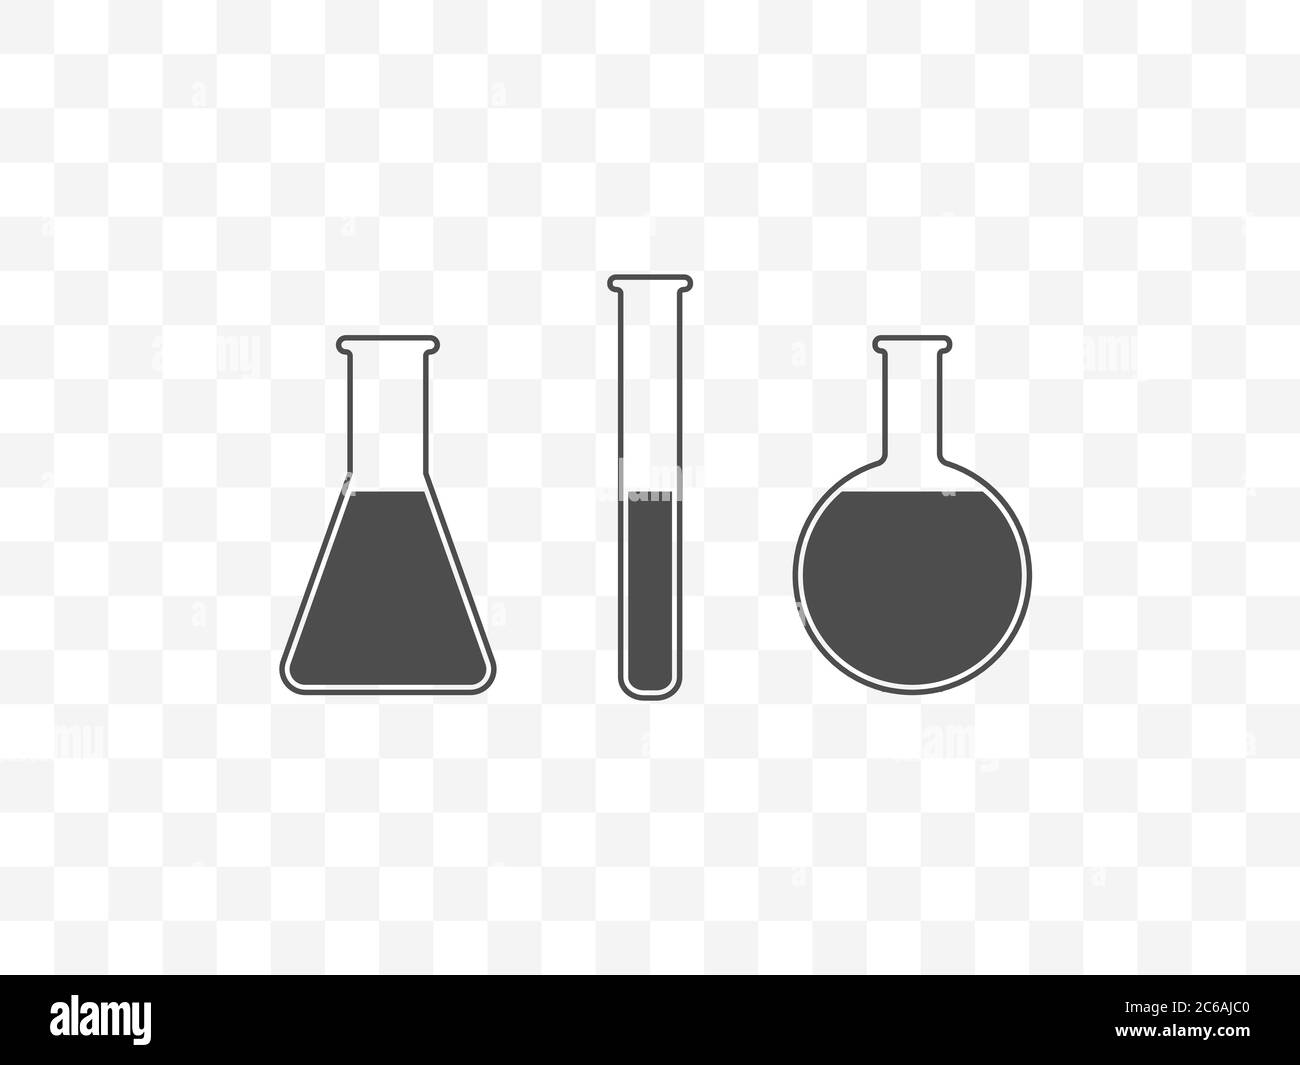 Biologie, Experiment, Flask Icon. Vektorgrafik, flache Ausführung. Stock Vektor